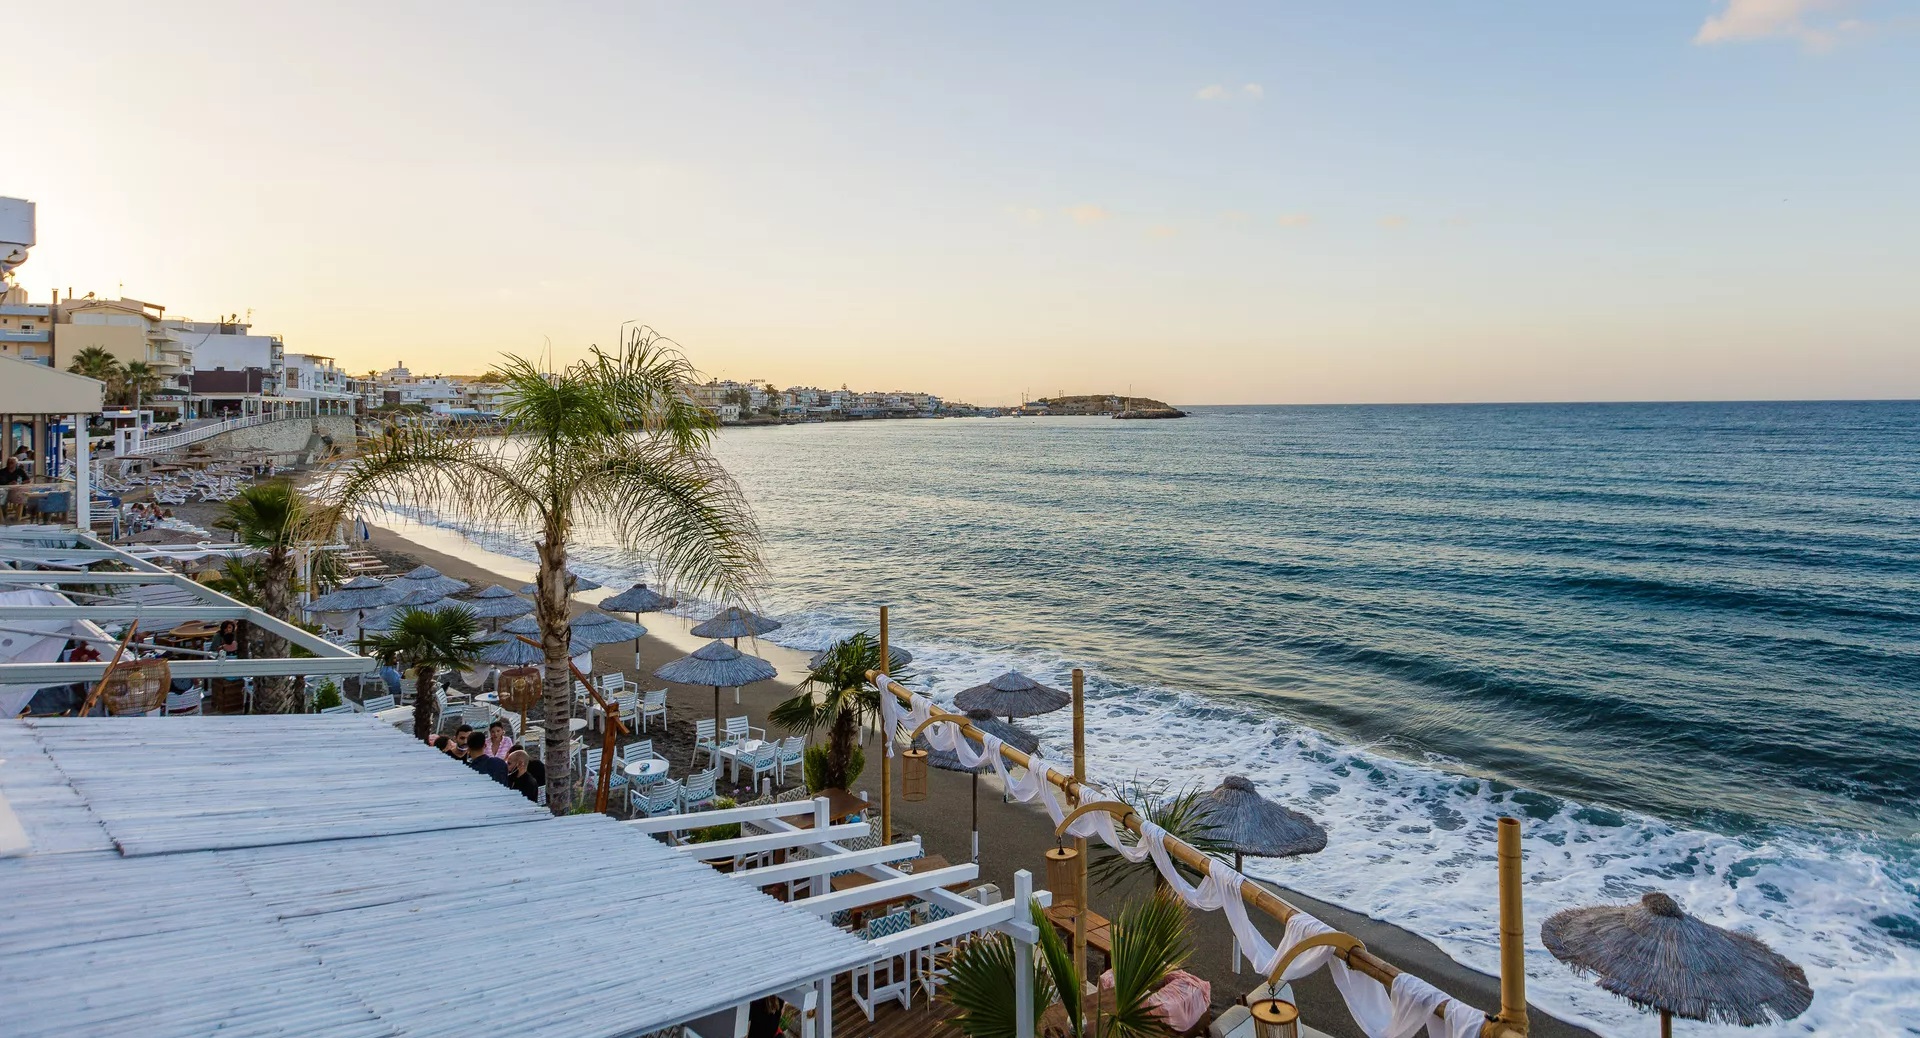 4* Kahlua Hotel - Χερσόνησος, Κρήτη ✦ 3 Ημέρες (2 Διανυκτερεύσεις) ✦ 2 άτομα ✦ 2 ✦ έως 30/09/2022 ✦ Μπροστά στην παραλία!